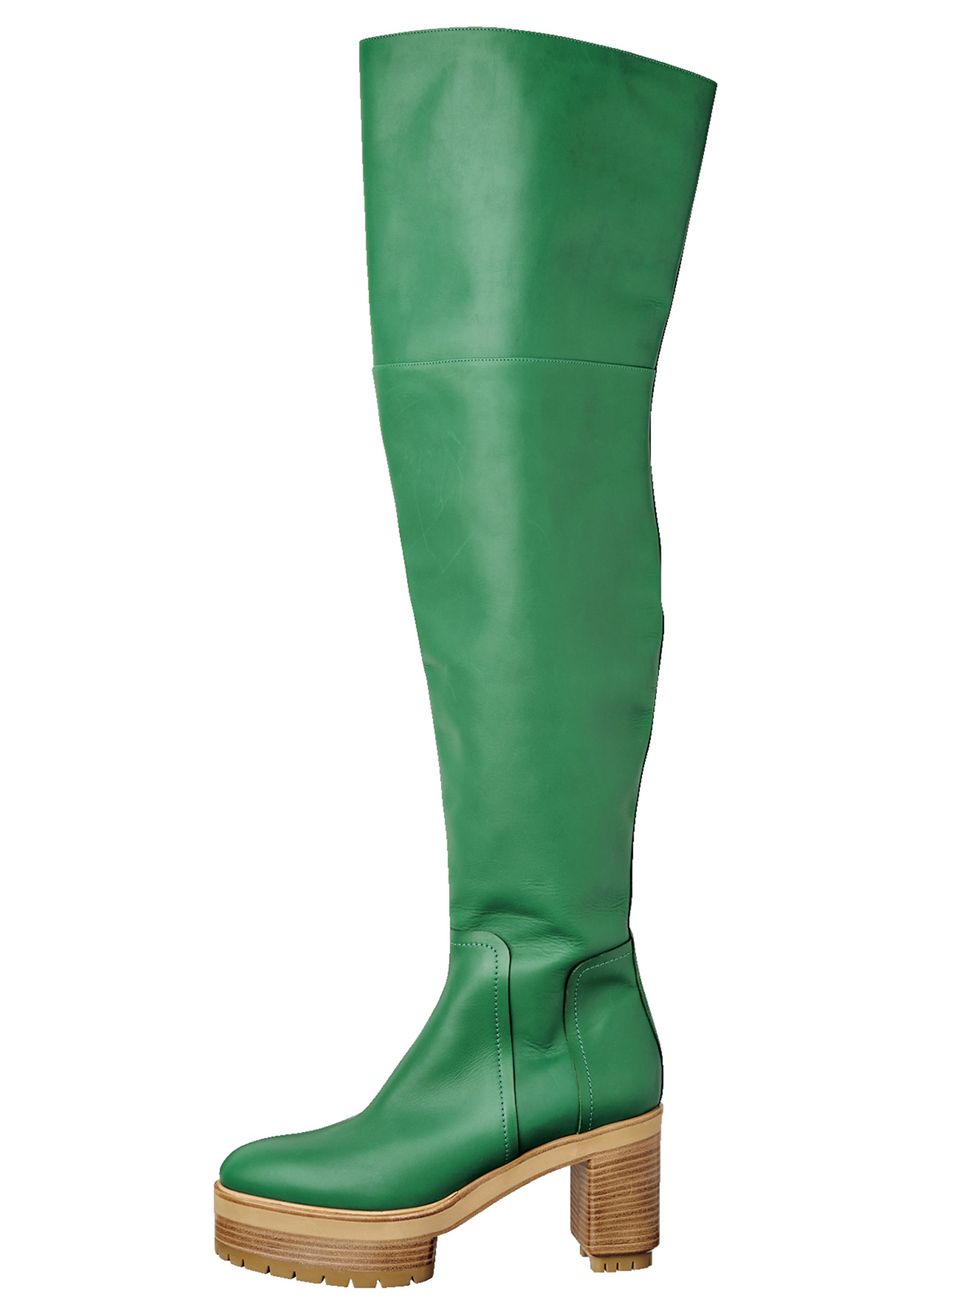 Footwear, Green, Boot, Knee-high boot, Shoe, Rain boot, Riding boot, Durango boot, High heels, Leather, 